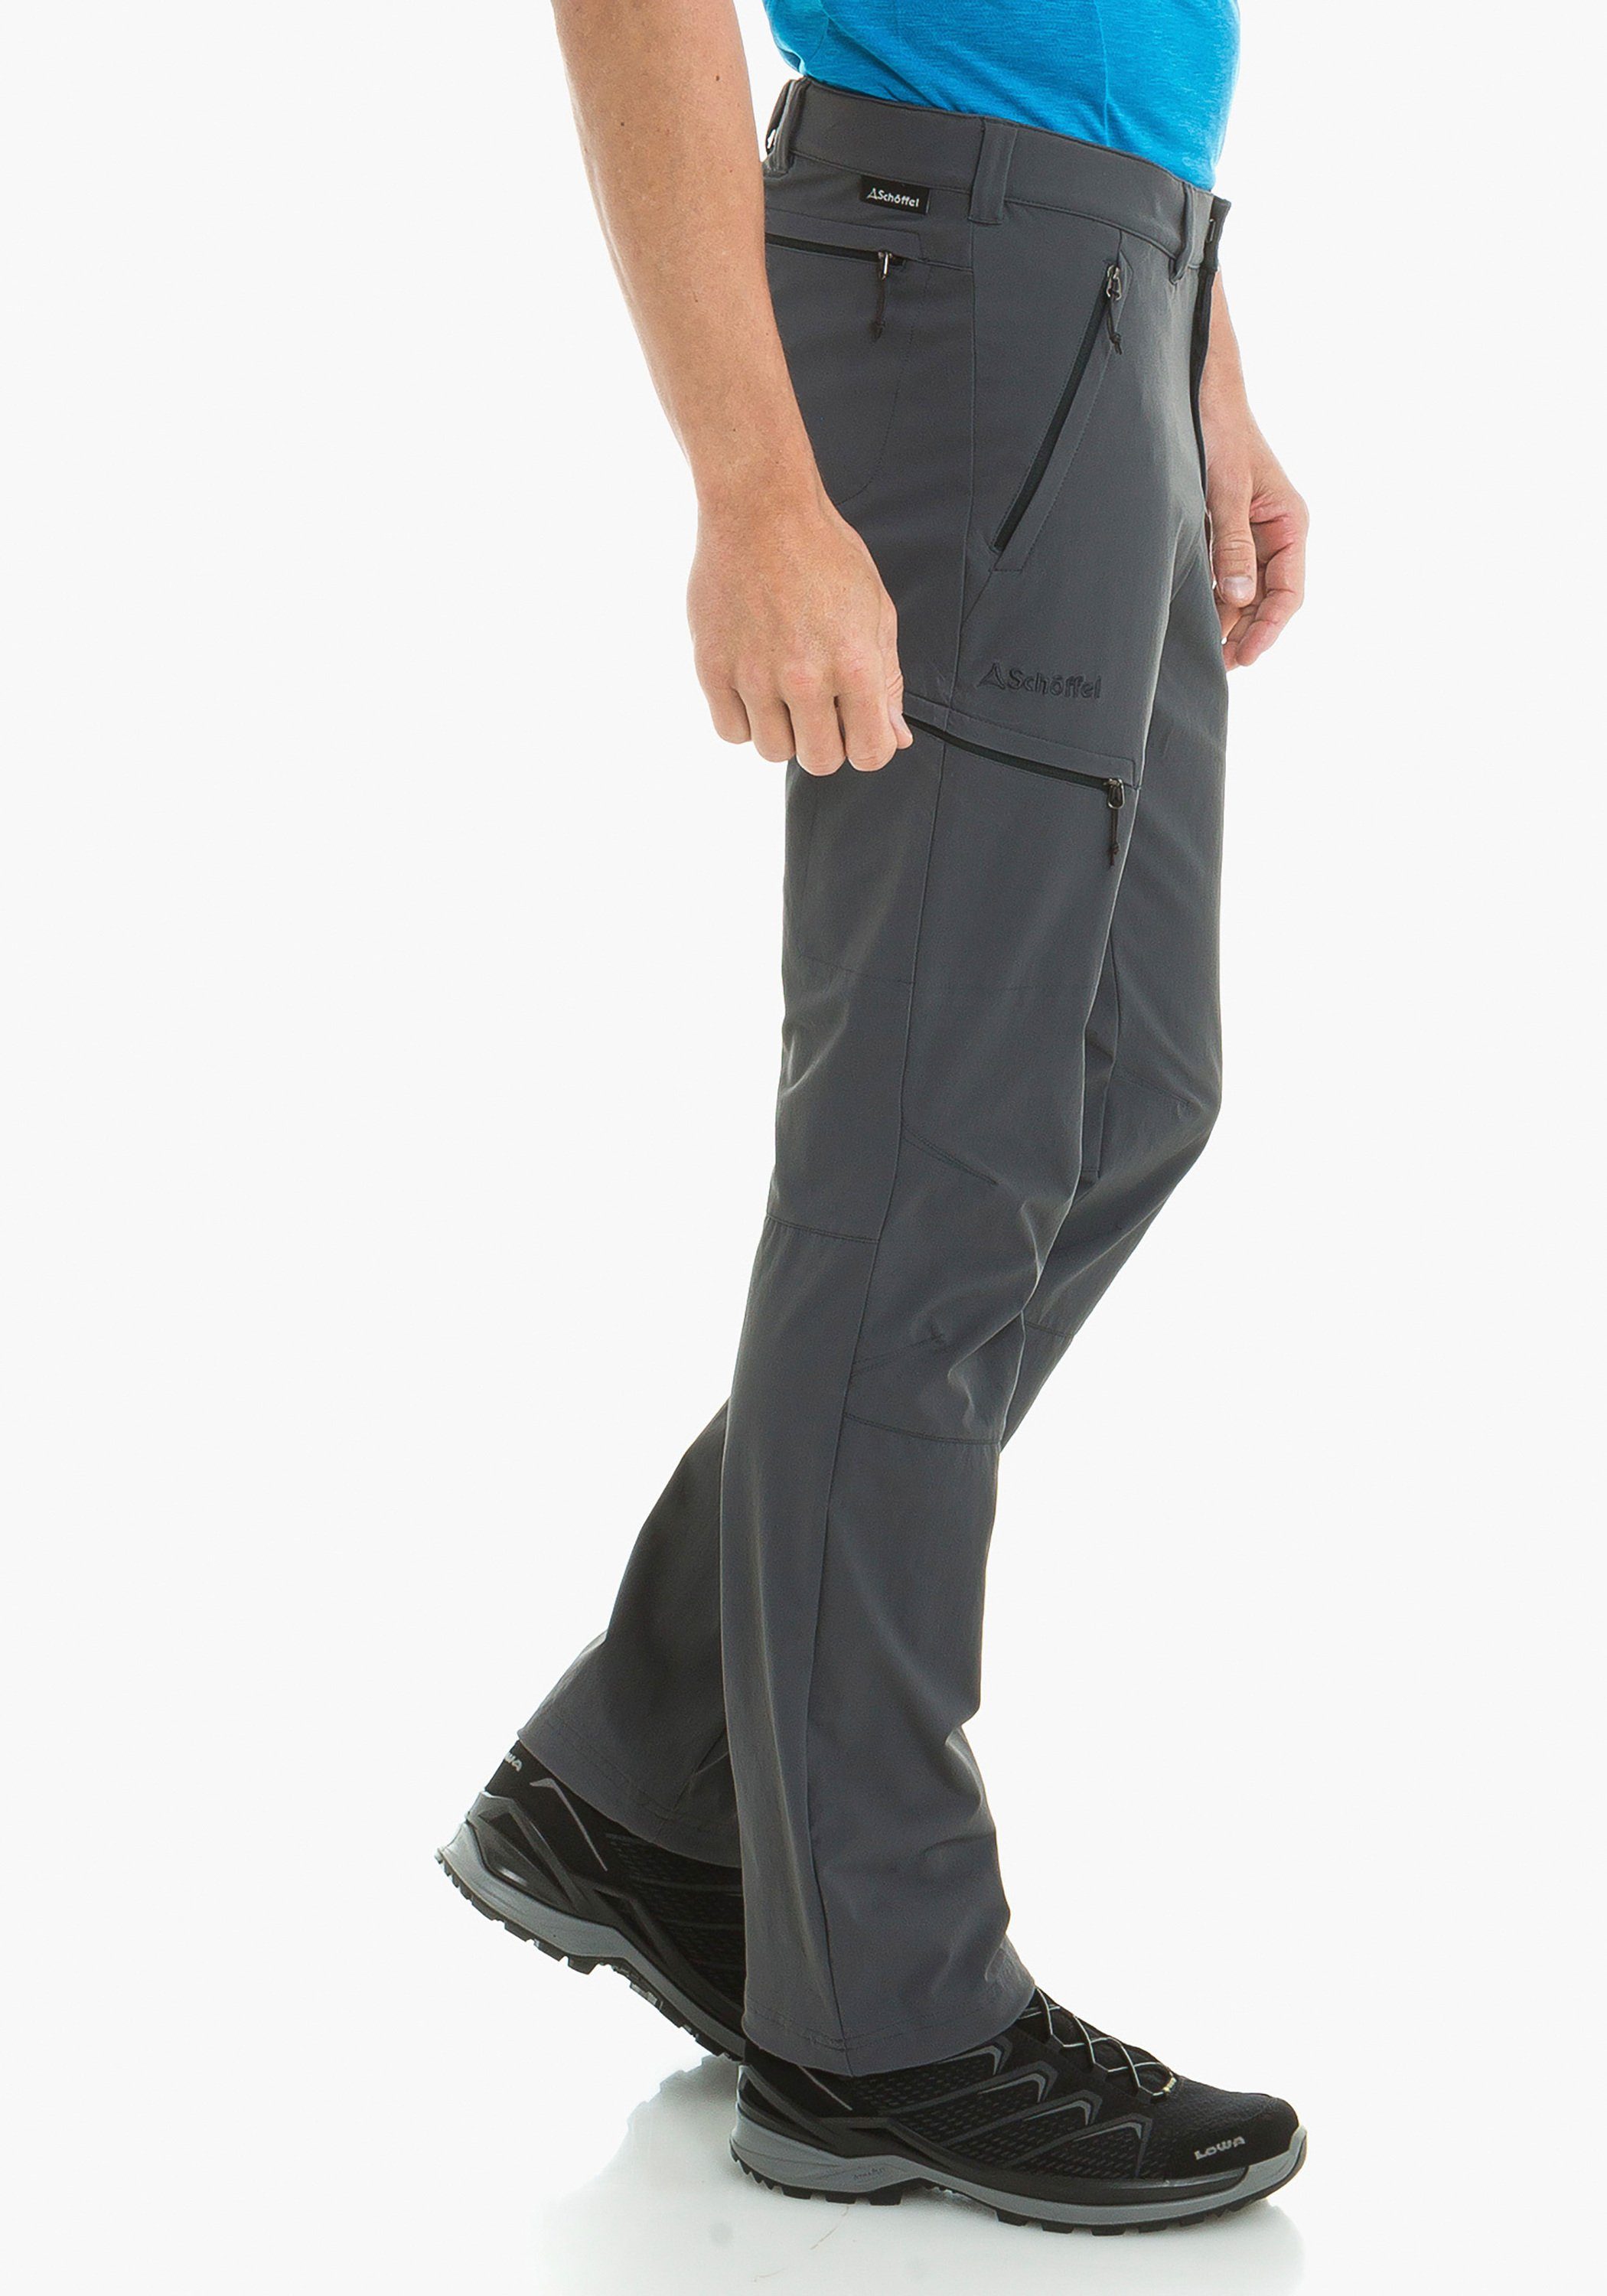 Koper1 Schöffel Outdoorhose Pants graphit